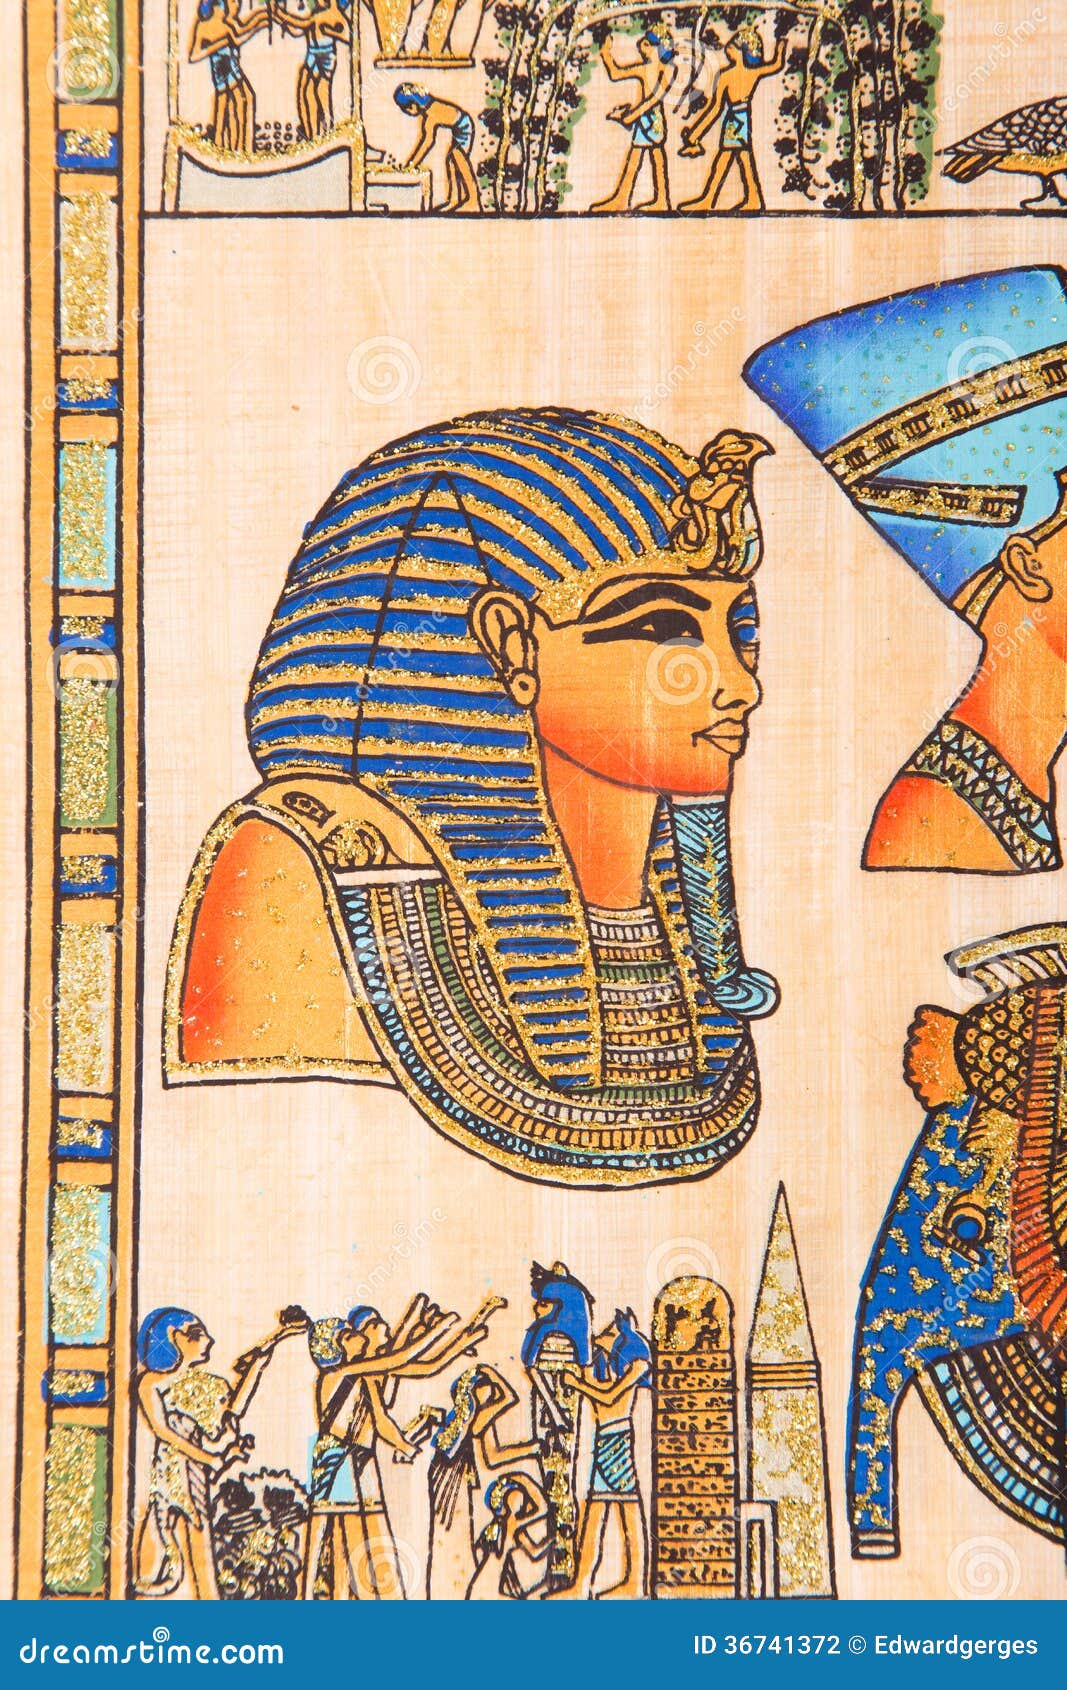 king Tutankhamen 20x15 Cm Hand Painted Egyptian Papyrus 